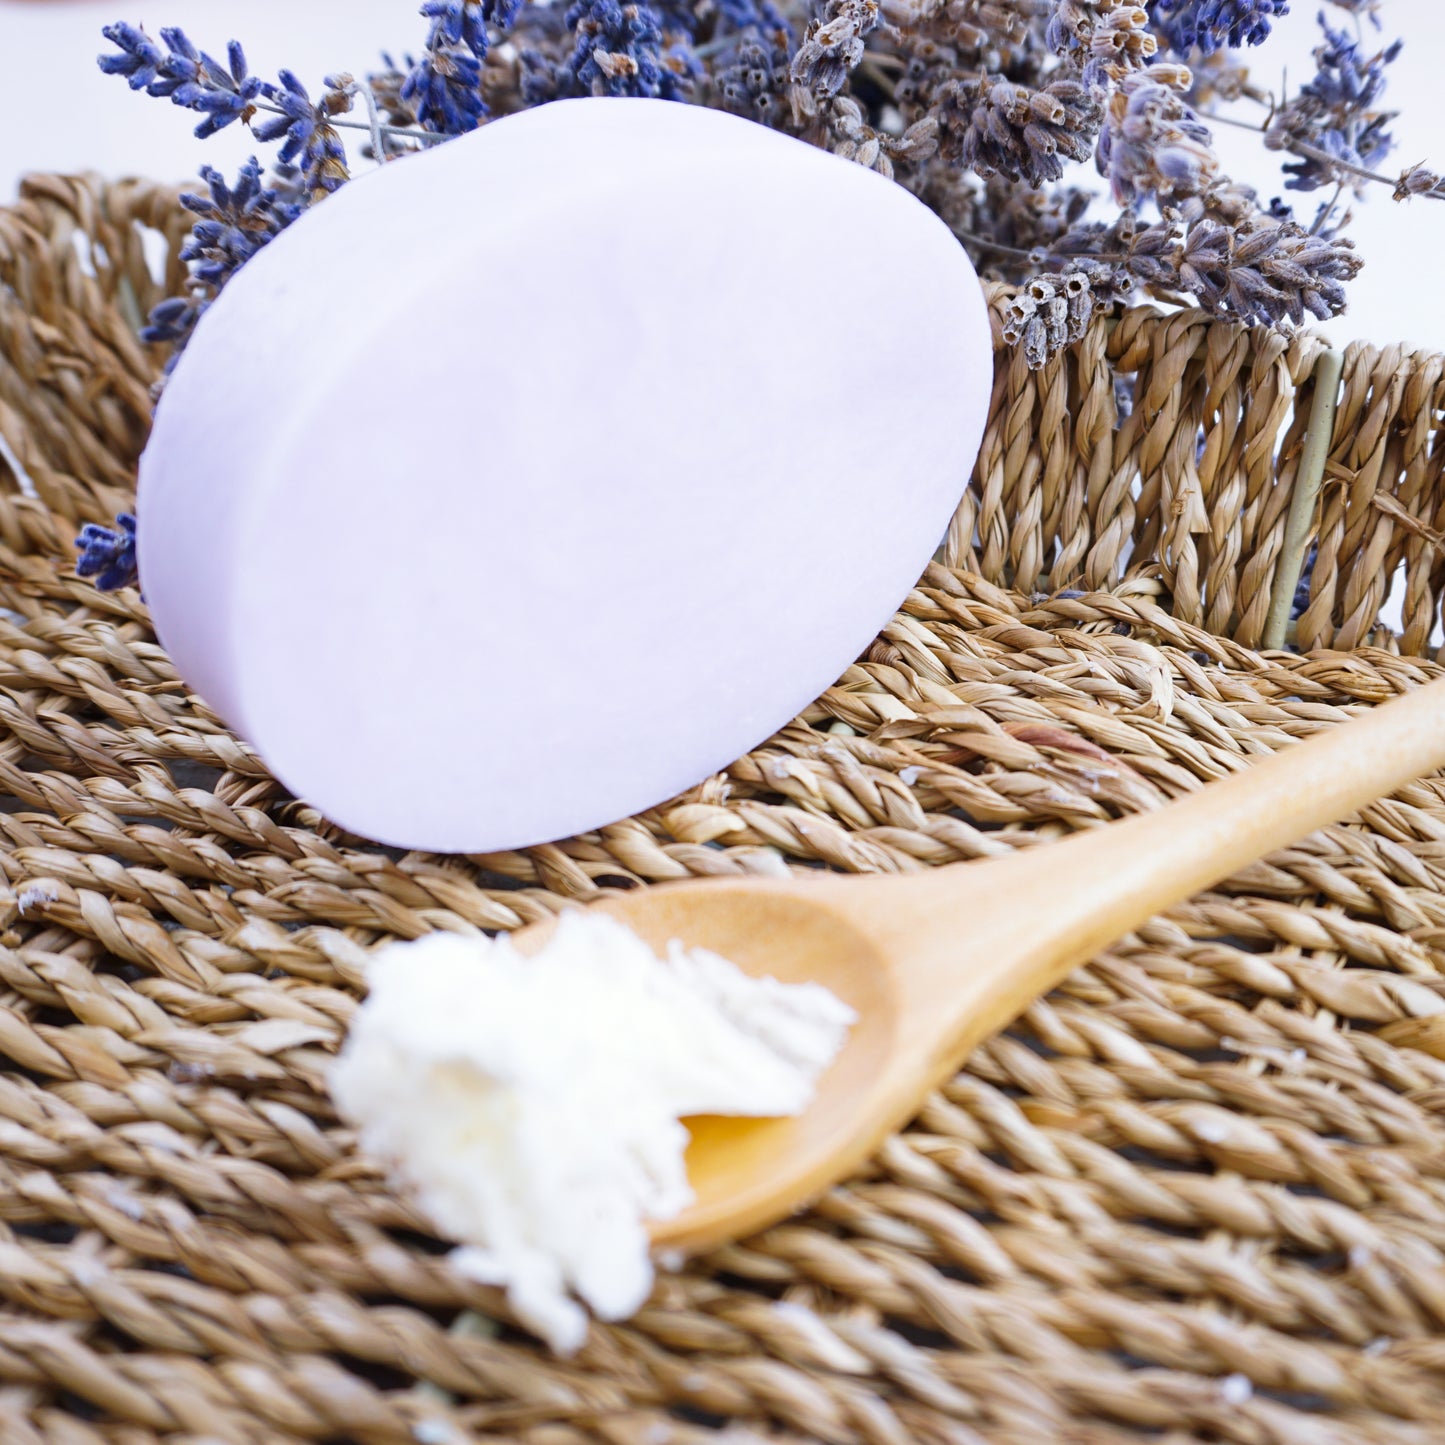 Washla lavender hydrating shampoo bar on a basket with dried lavender for decoration